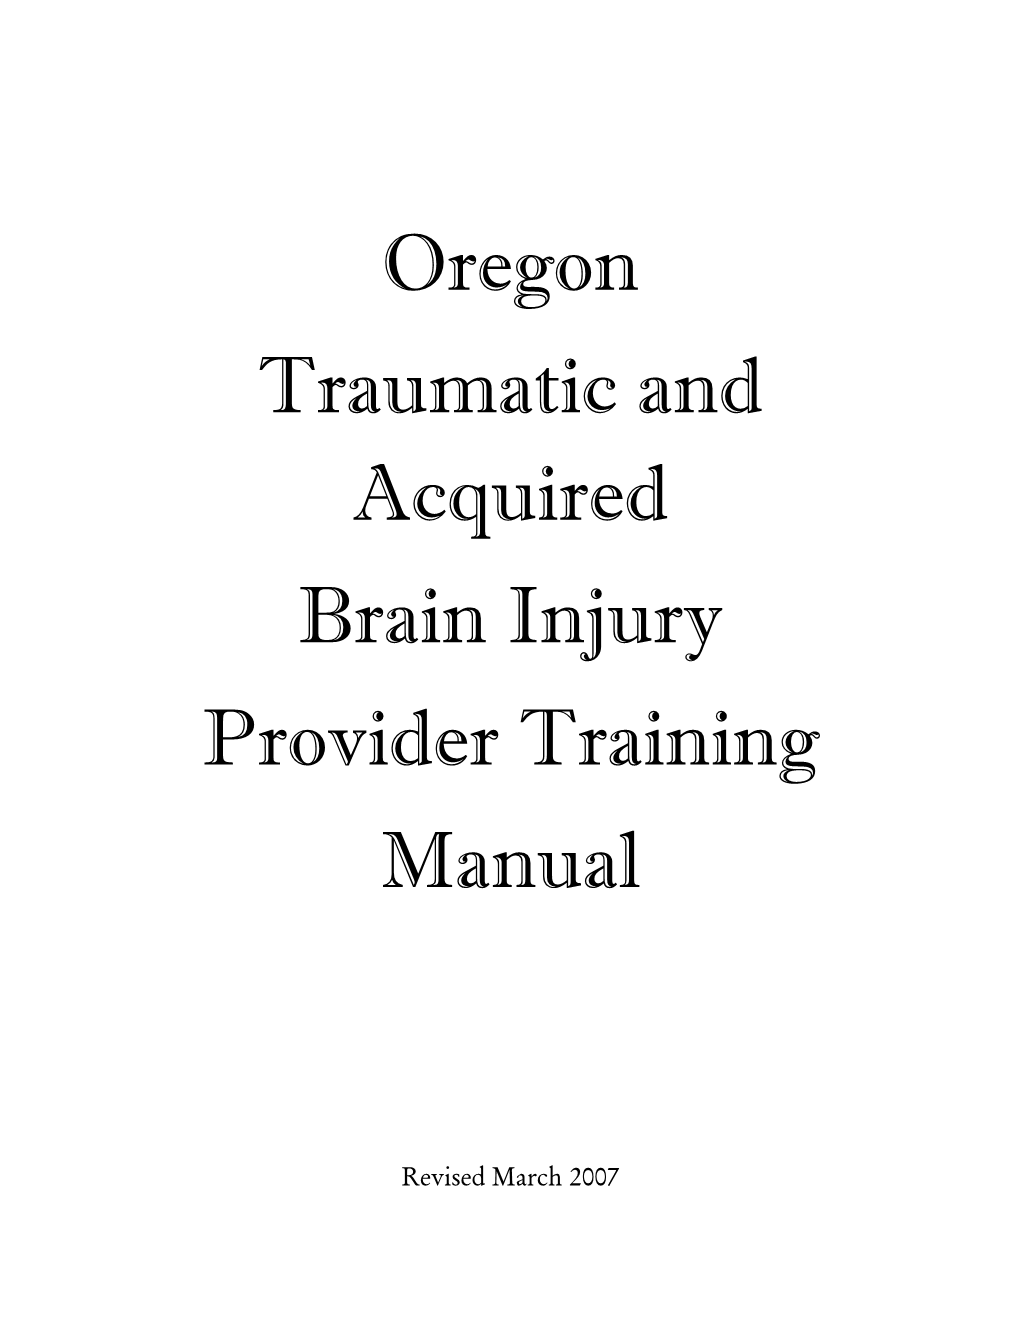 Oregon Traumatic and Acquired Brain Injury Provider Training Manual